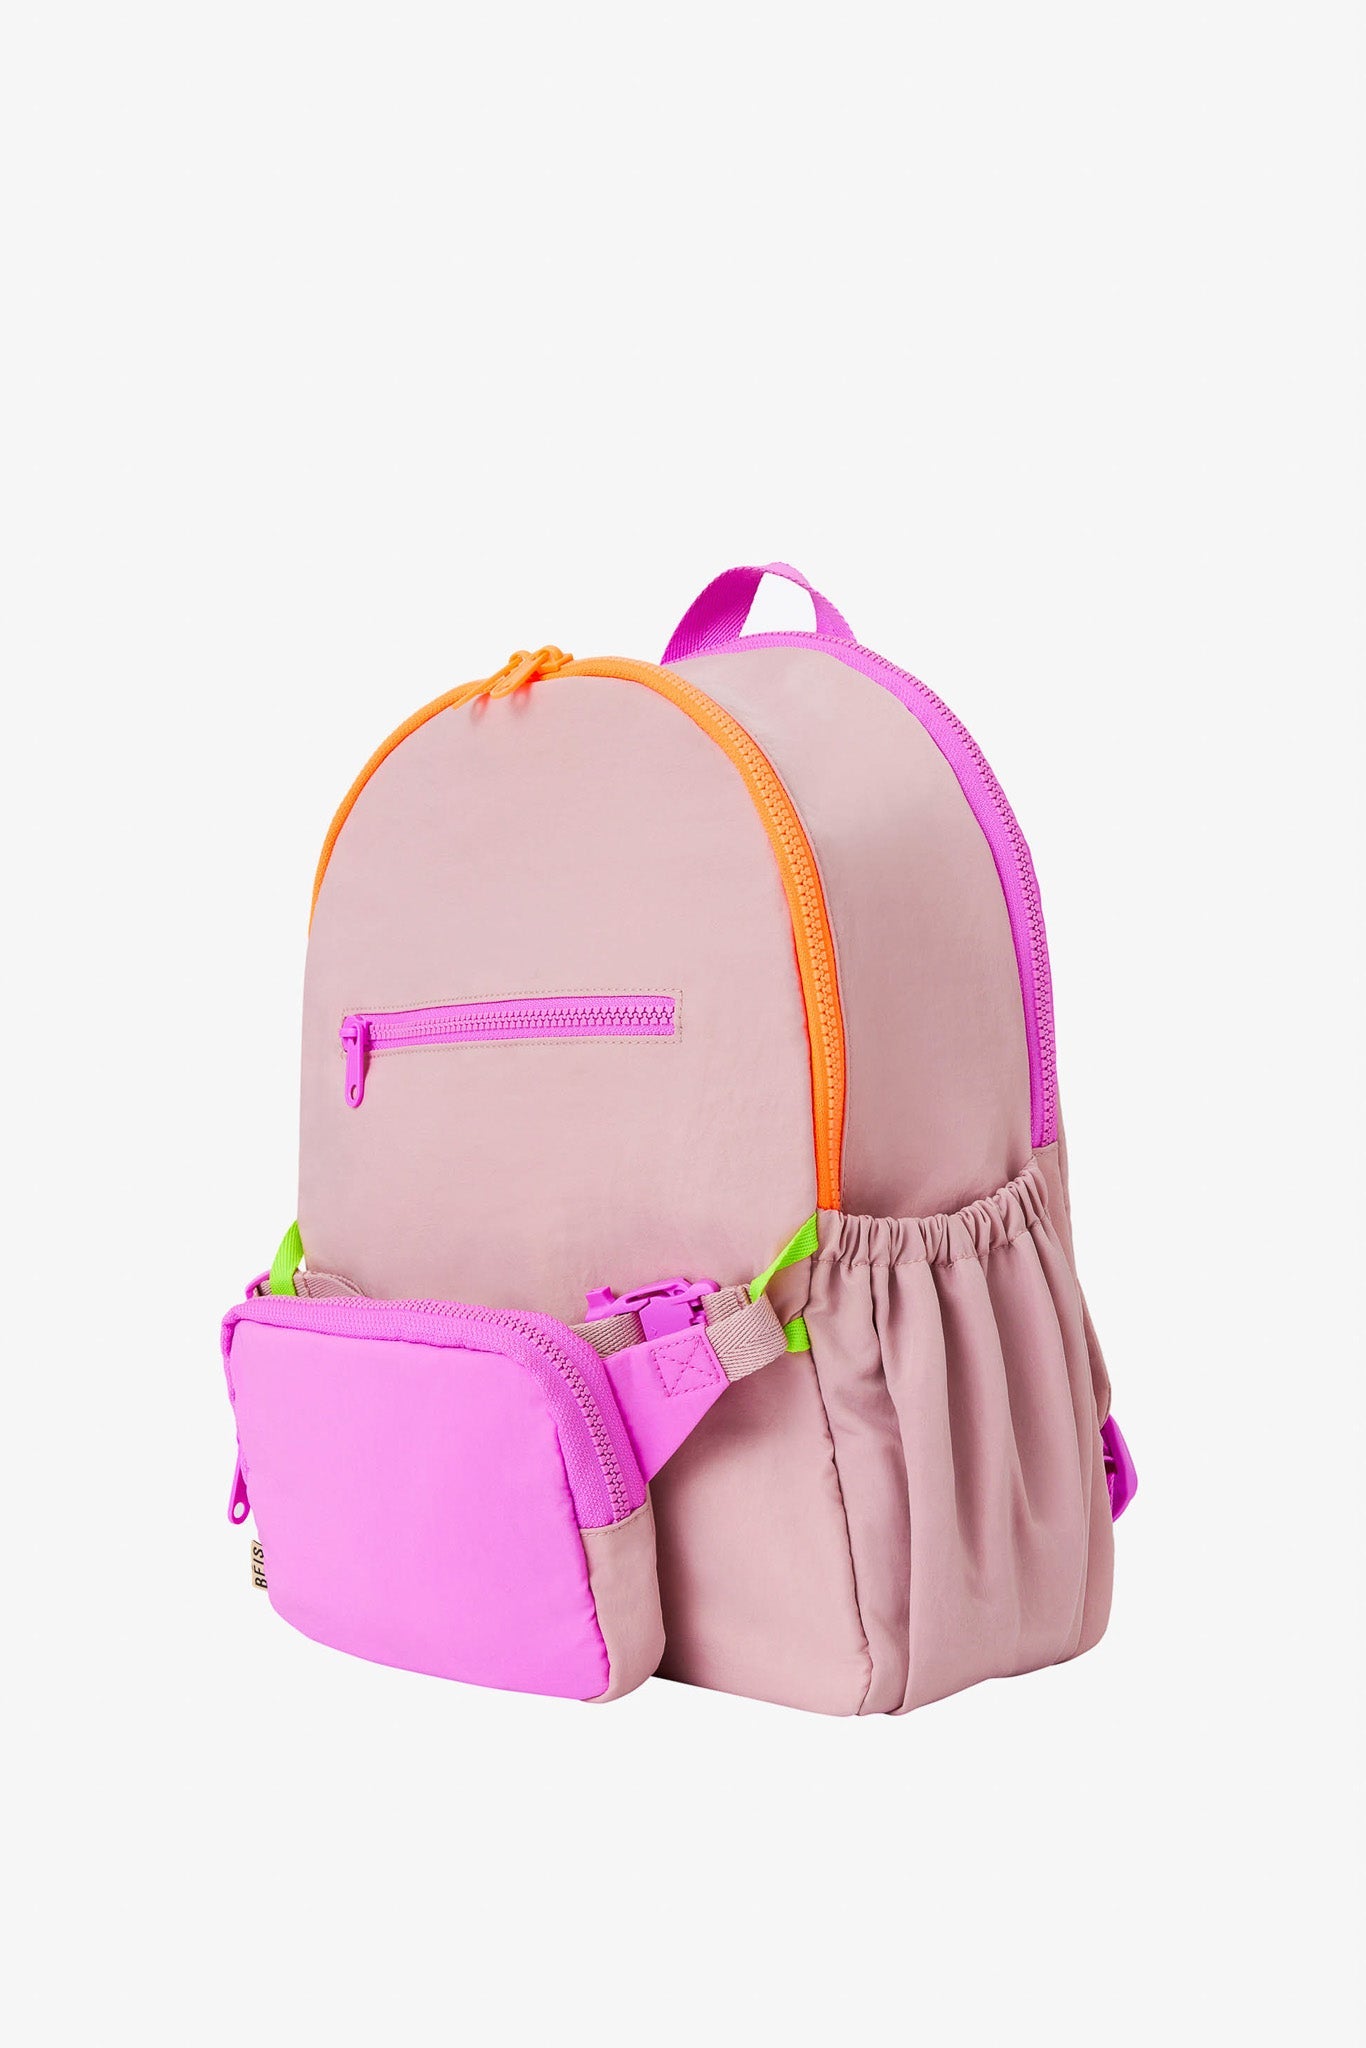 The Kids Backpack in Atlas Pink